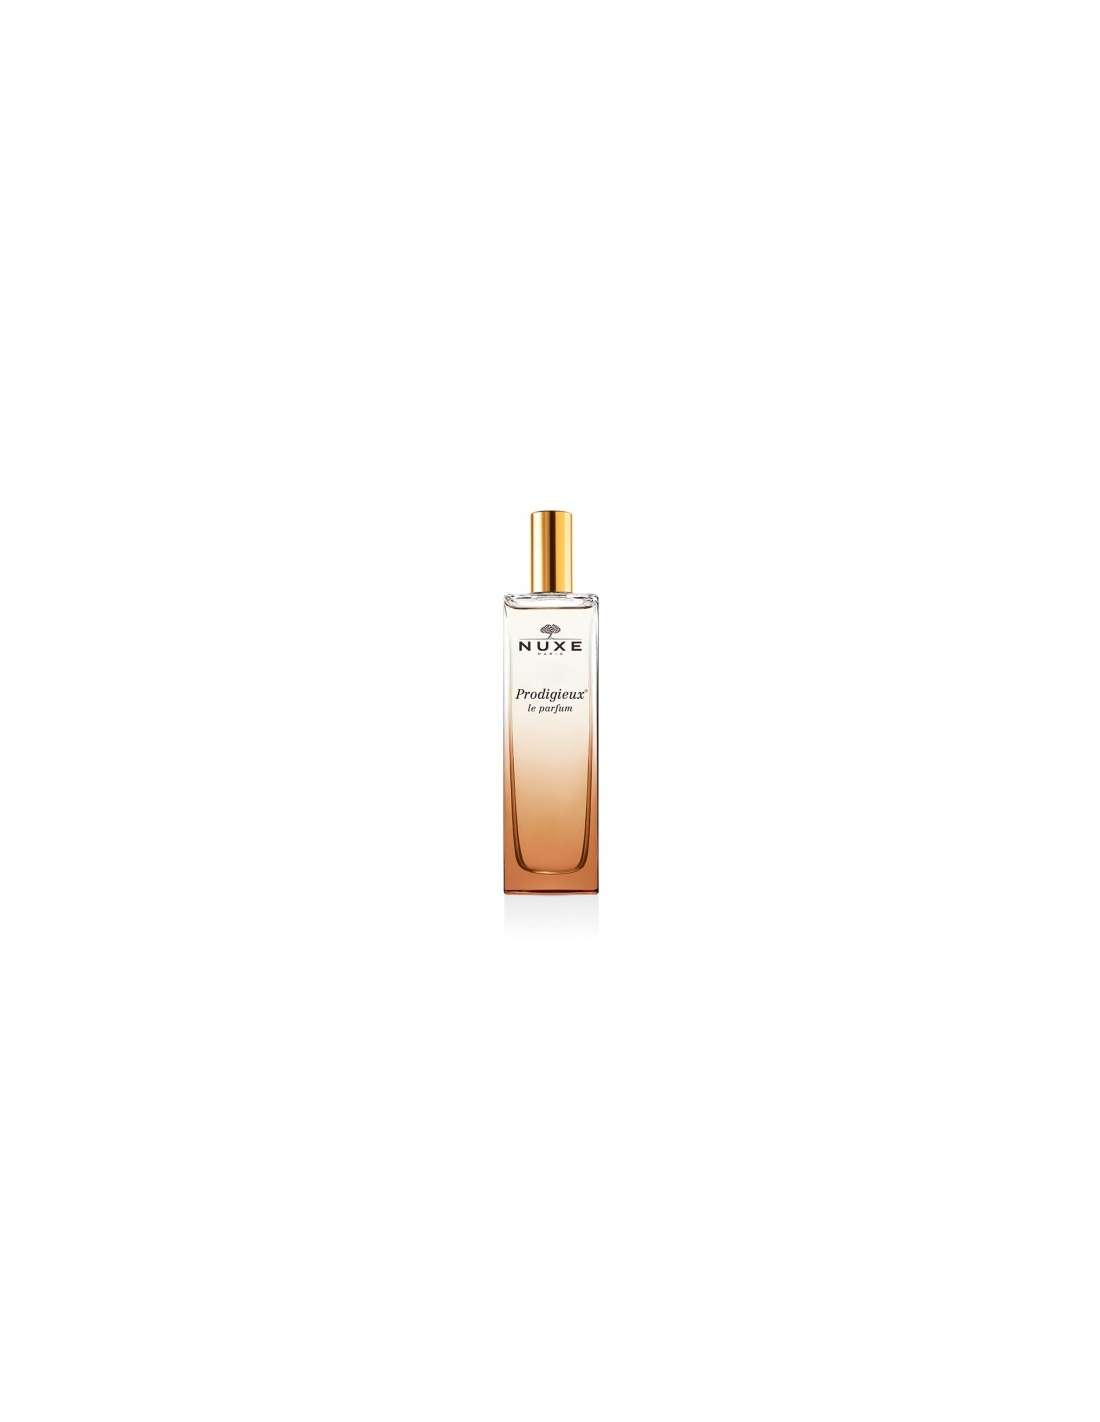 Perfume Nuxe Prodigious 30ml - Notes of Orange Blossom, Magnolia & Va